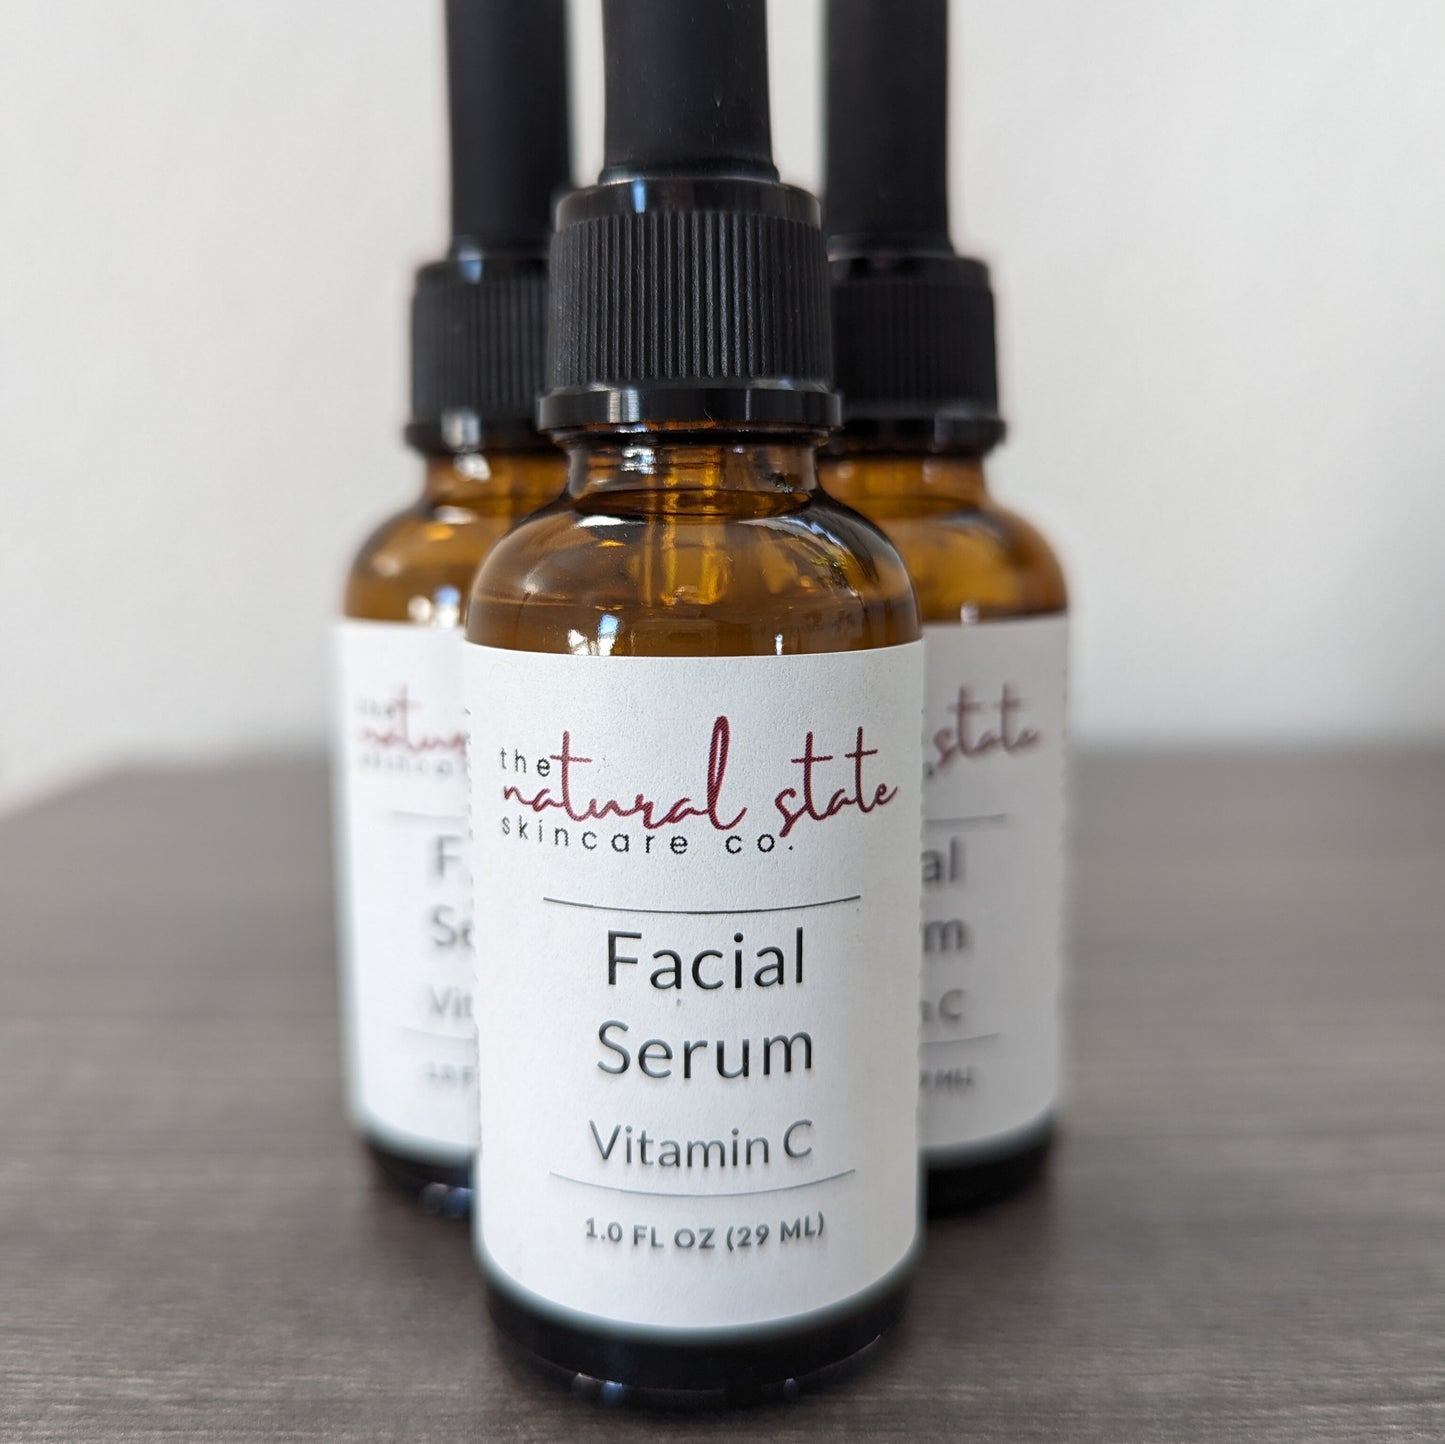 Facial Serum | Daily Facial Serums (Daily, Niacinamide, Bakuchi, Hyaluronic Acid, Vitamin C)